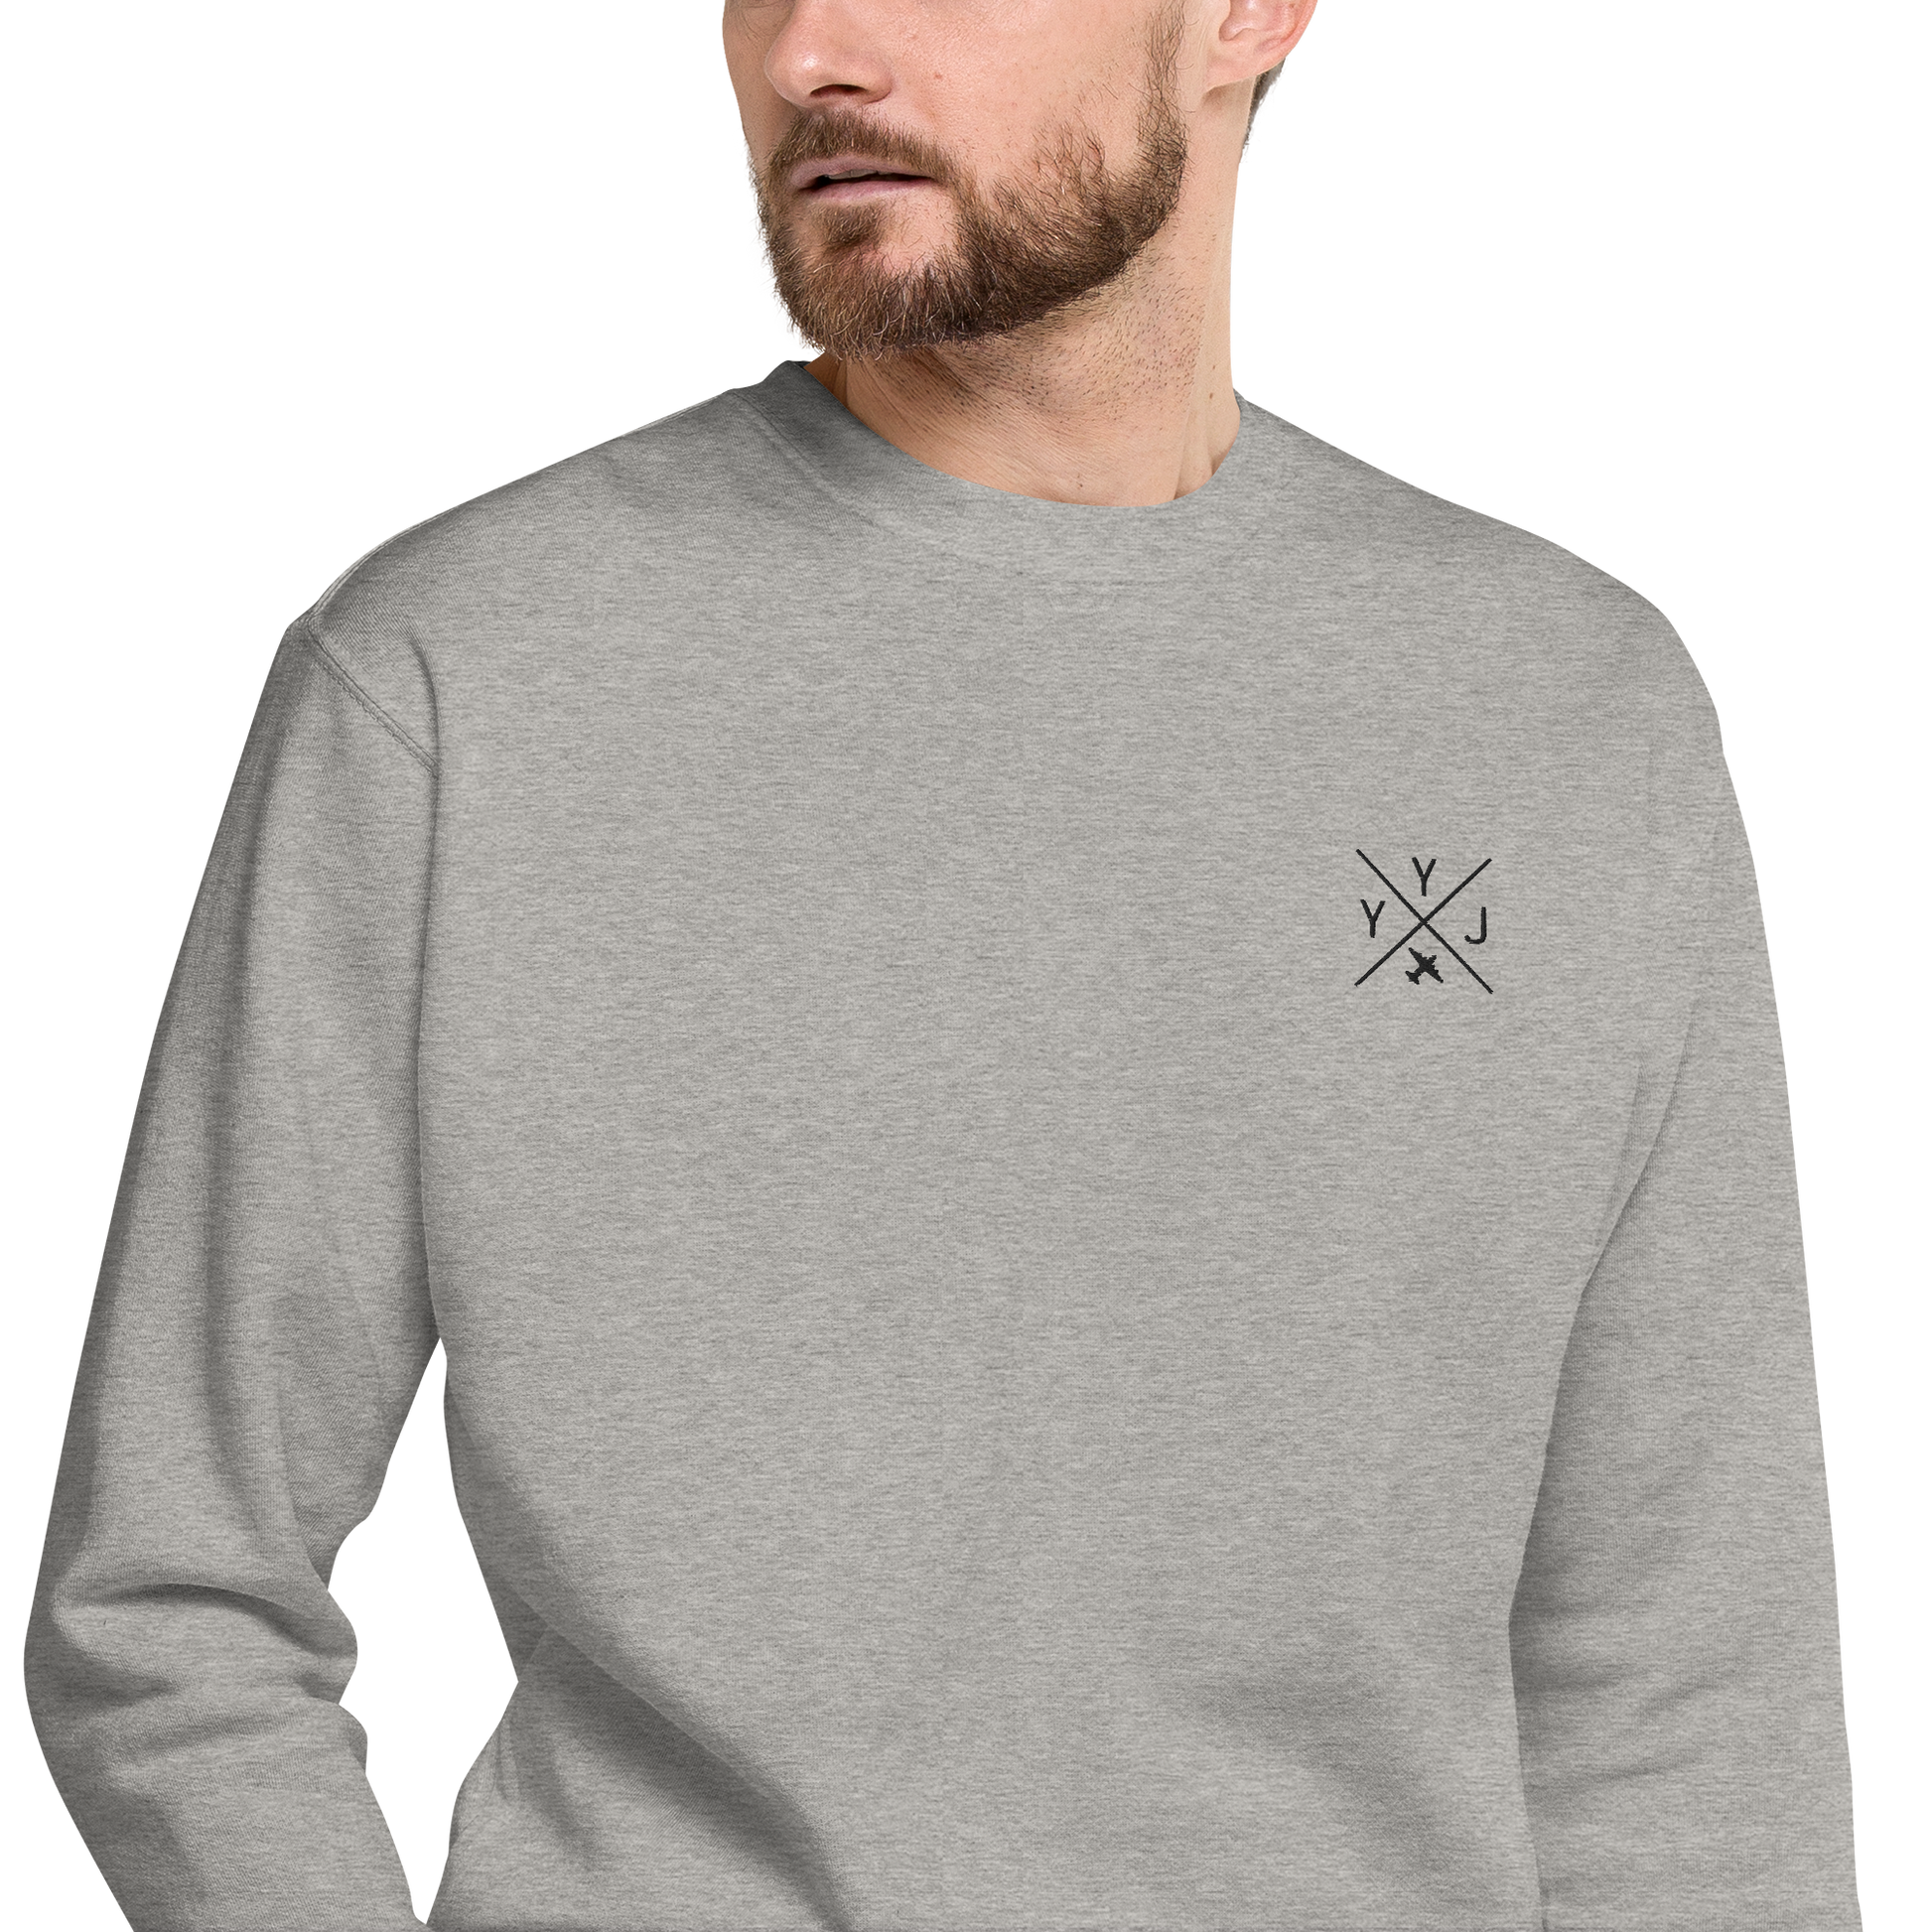 YHM Designs - YYJ Victoria Premium Sweatshirt - Crossed-X Design with Airport Code and Vintage Propliner - Black Embroidery - Image 09